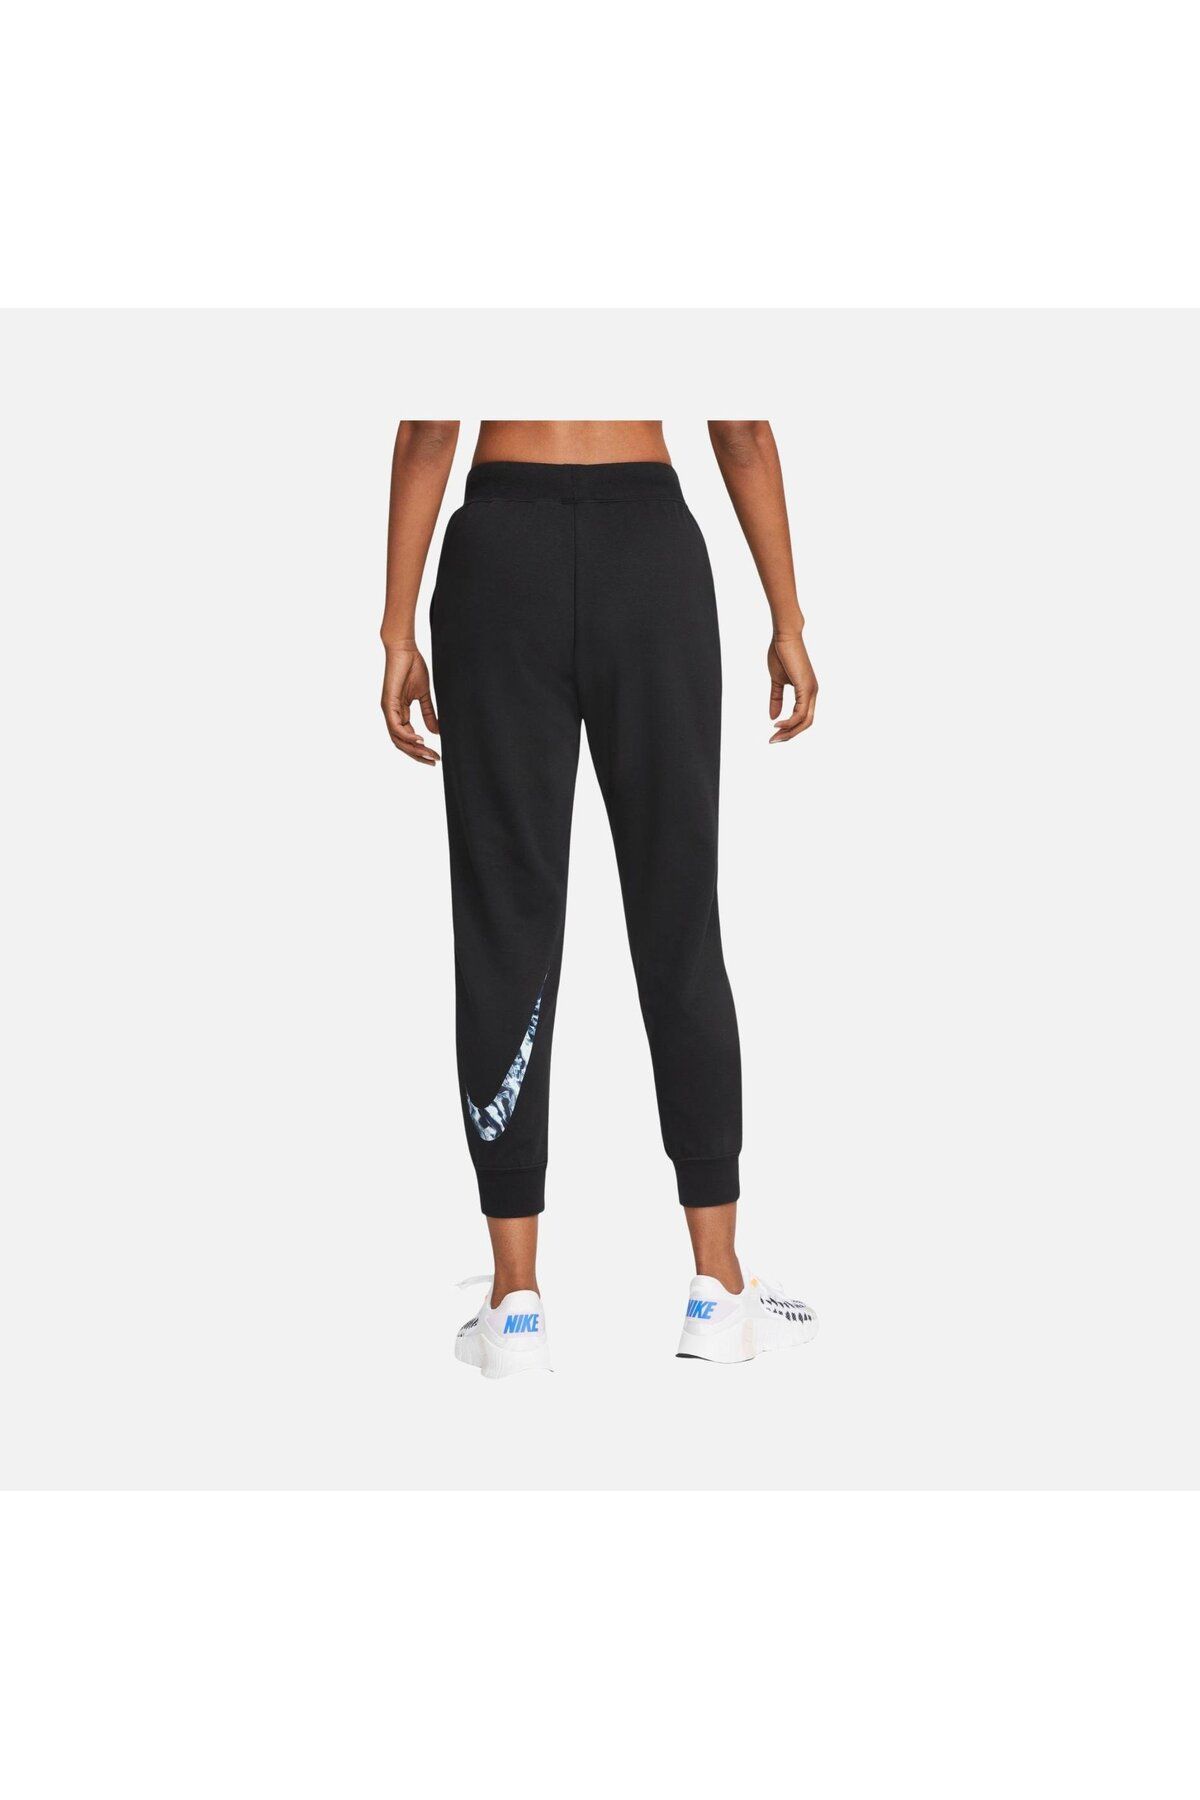 Nike Dri-Fit Get Fit Graphic Training Kadın Eşofman Altı